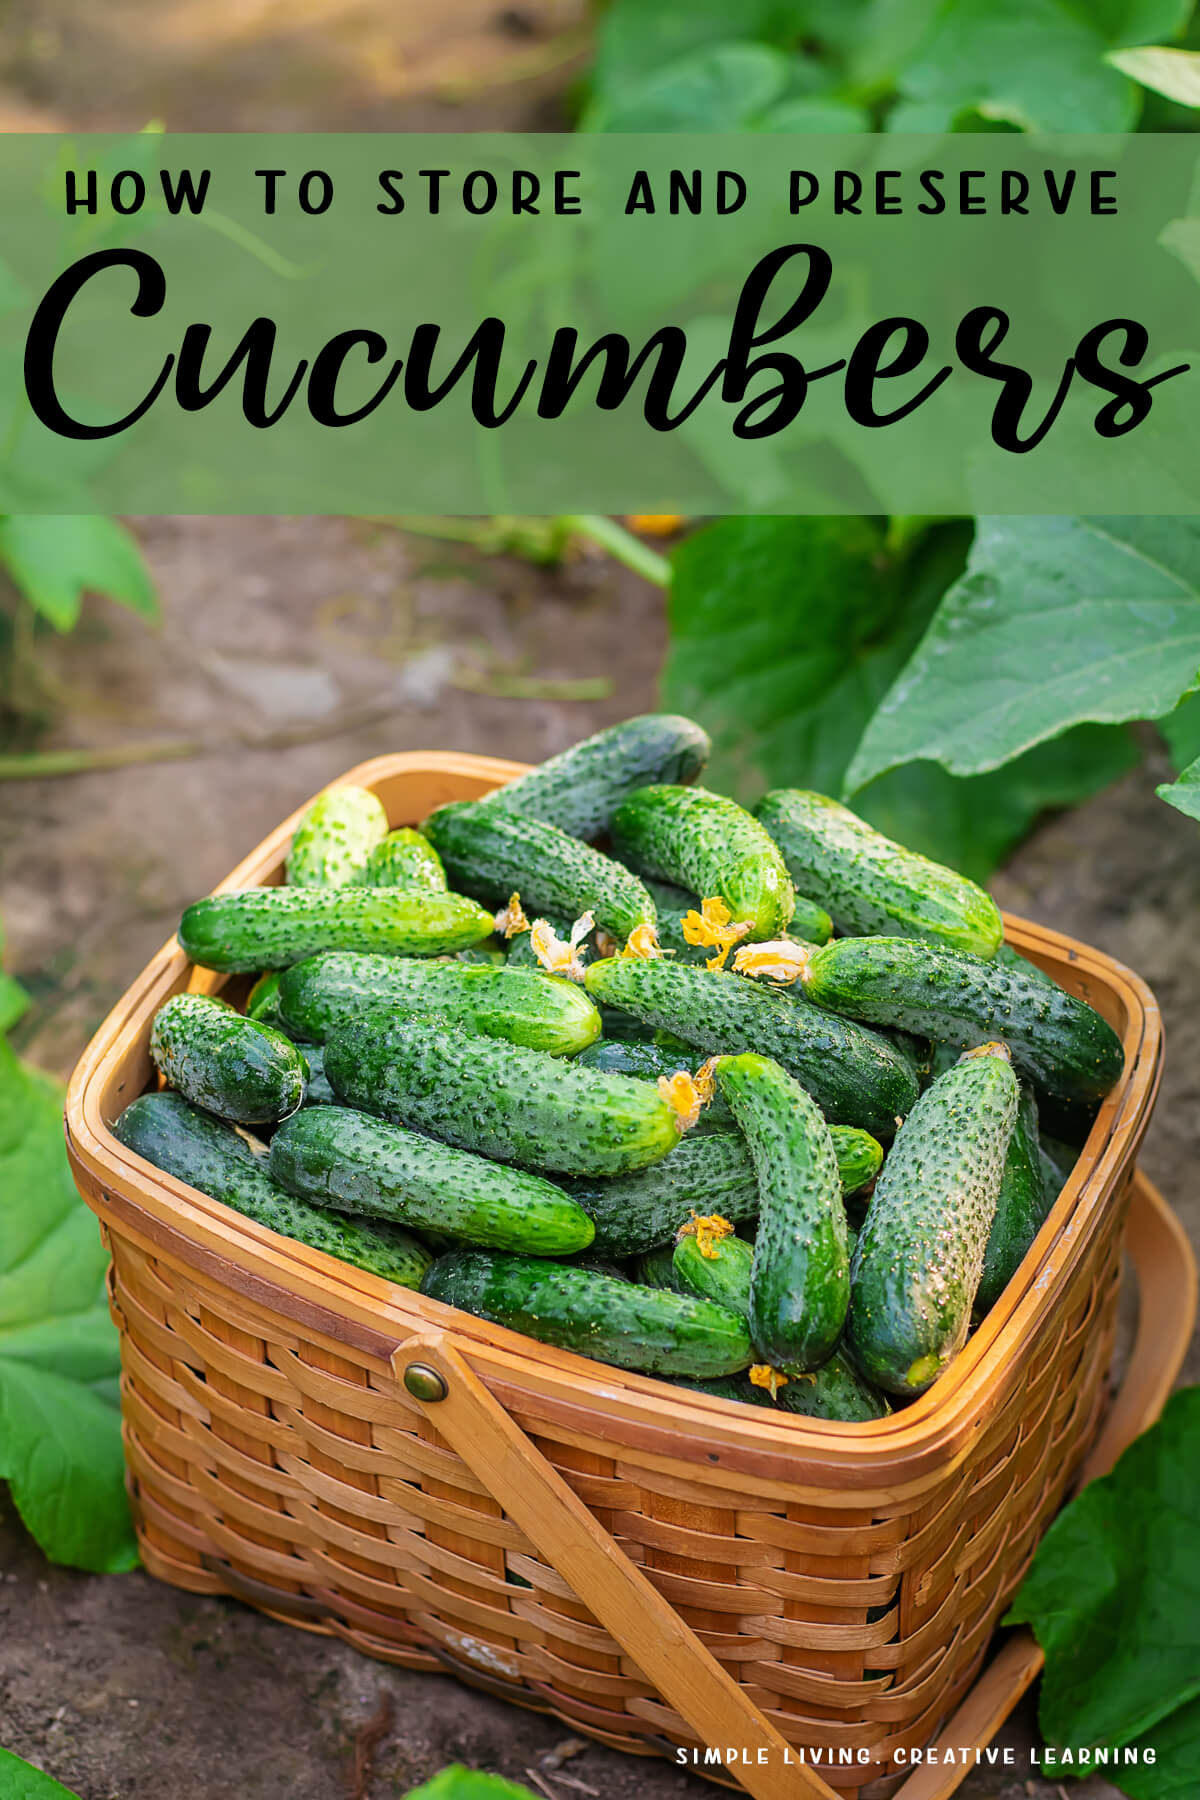 Ways to Preserve Cucumbers